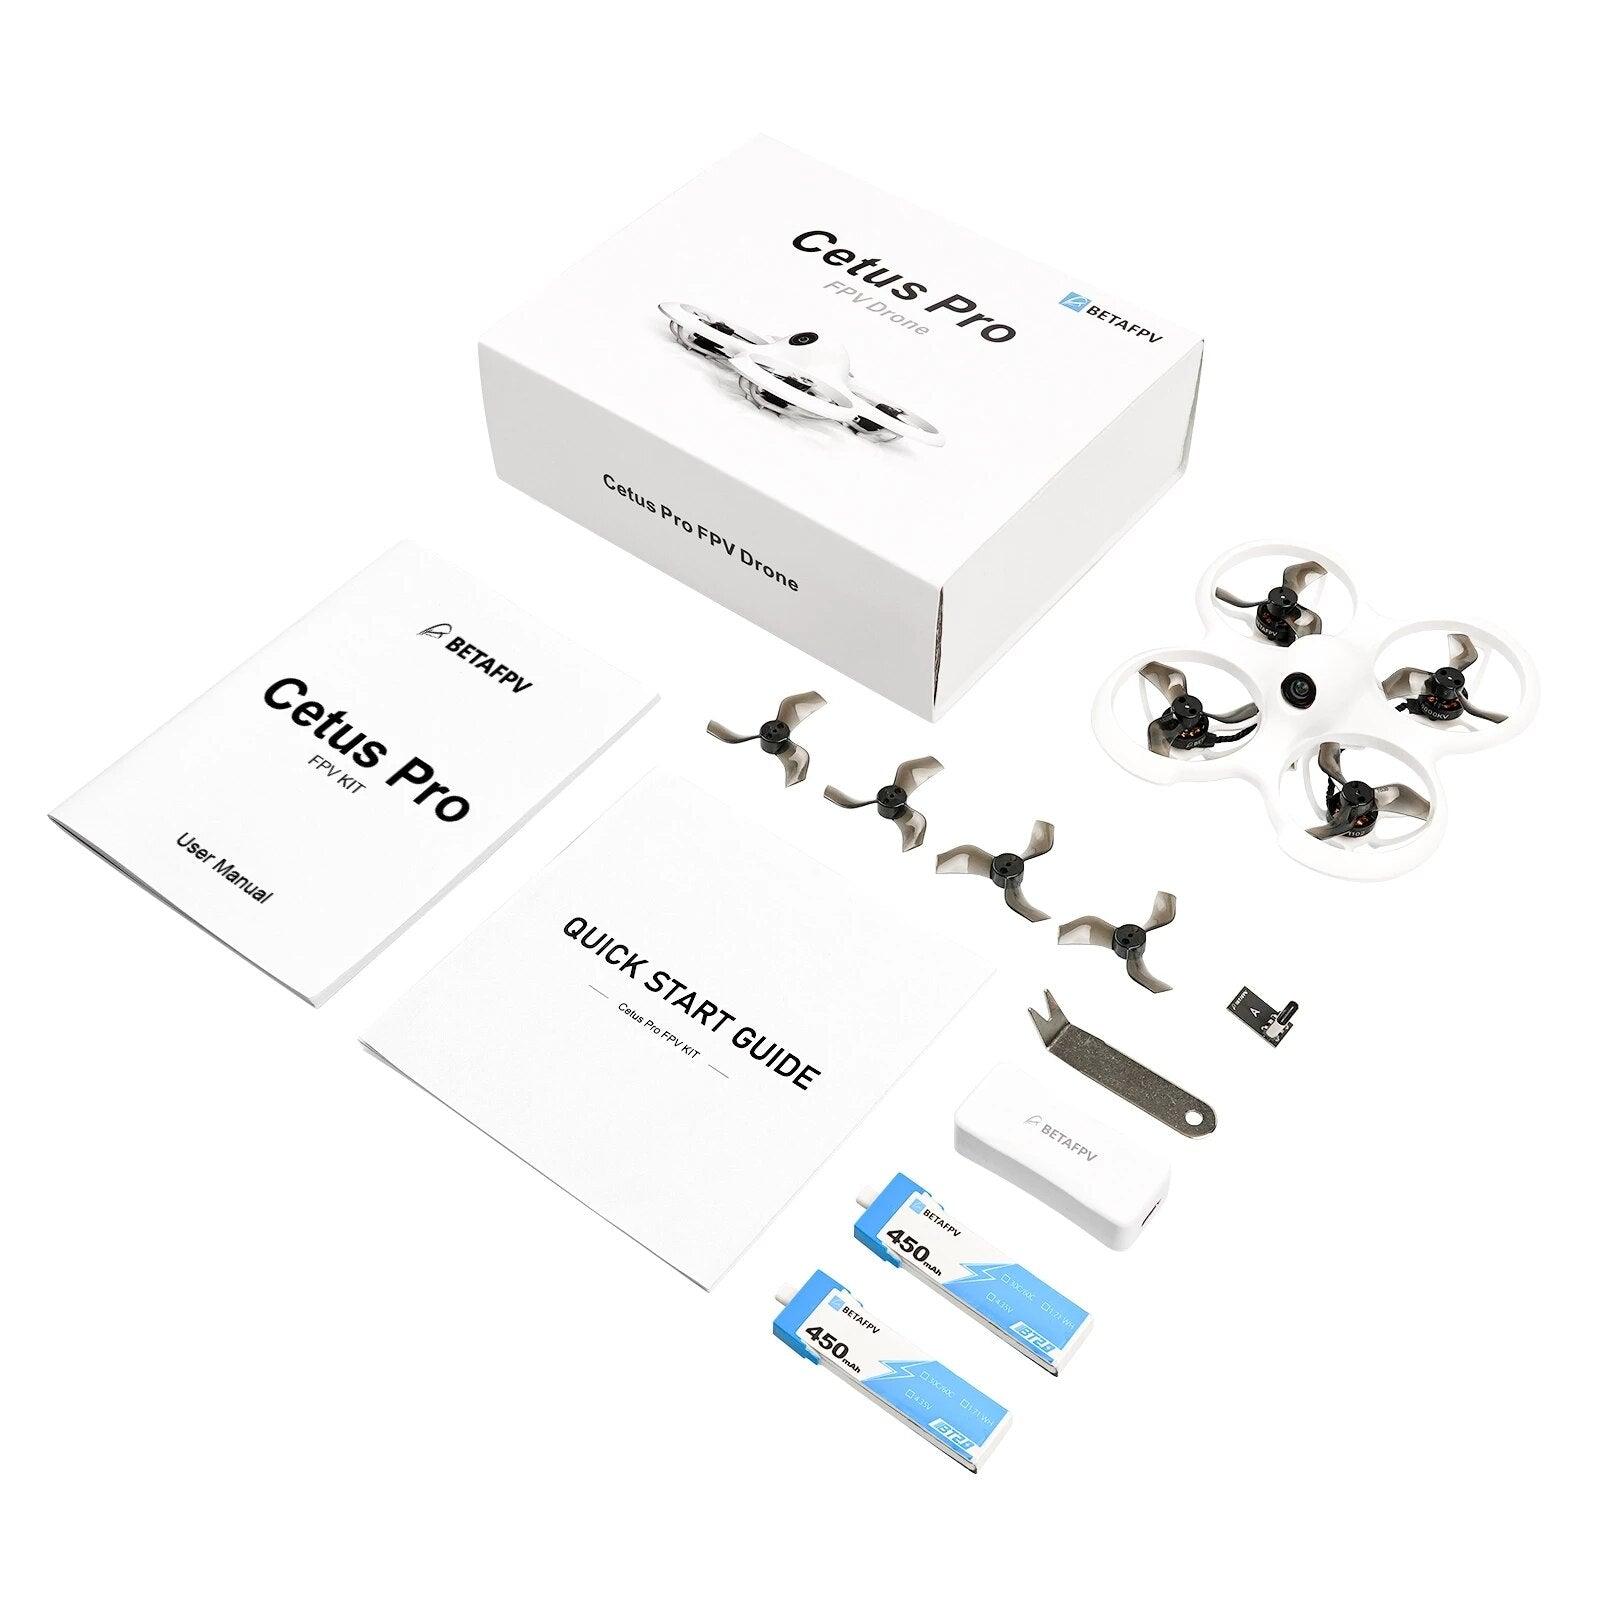 BETAFPV Cetus X FPV Kit 1S 800TVL Brushless FPV Drone LiteRadio 3